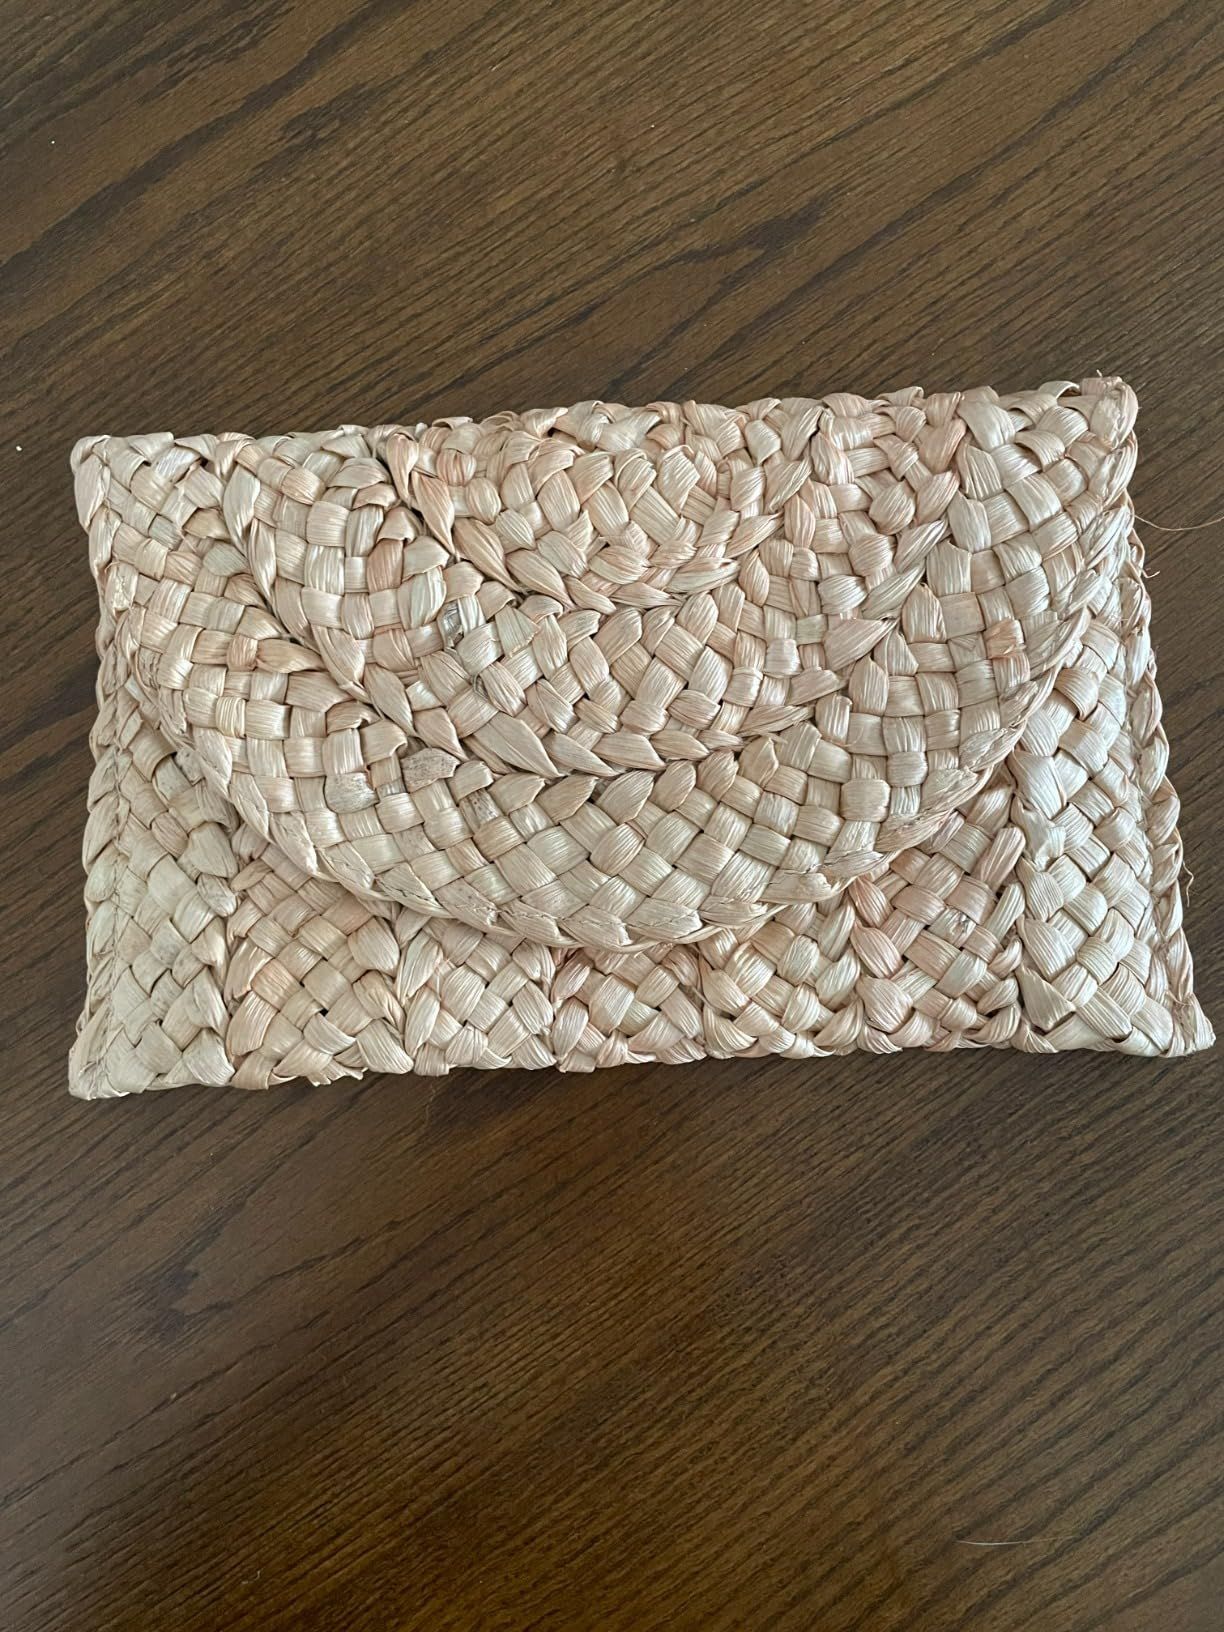 Freie Liebe Straw Clutch Purses for Women Summer Beach Bags Envelope Woven Clutch Handbags | Amazon (US)